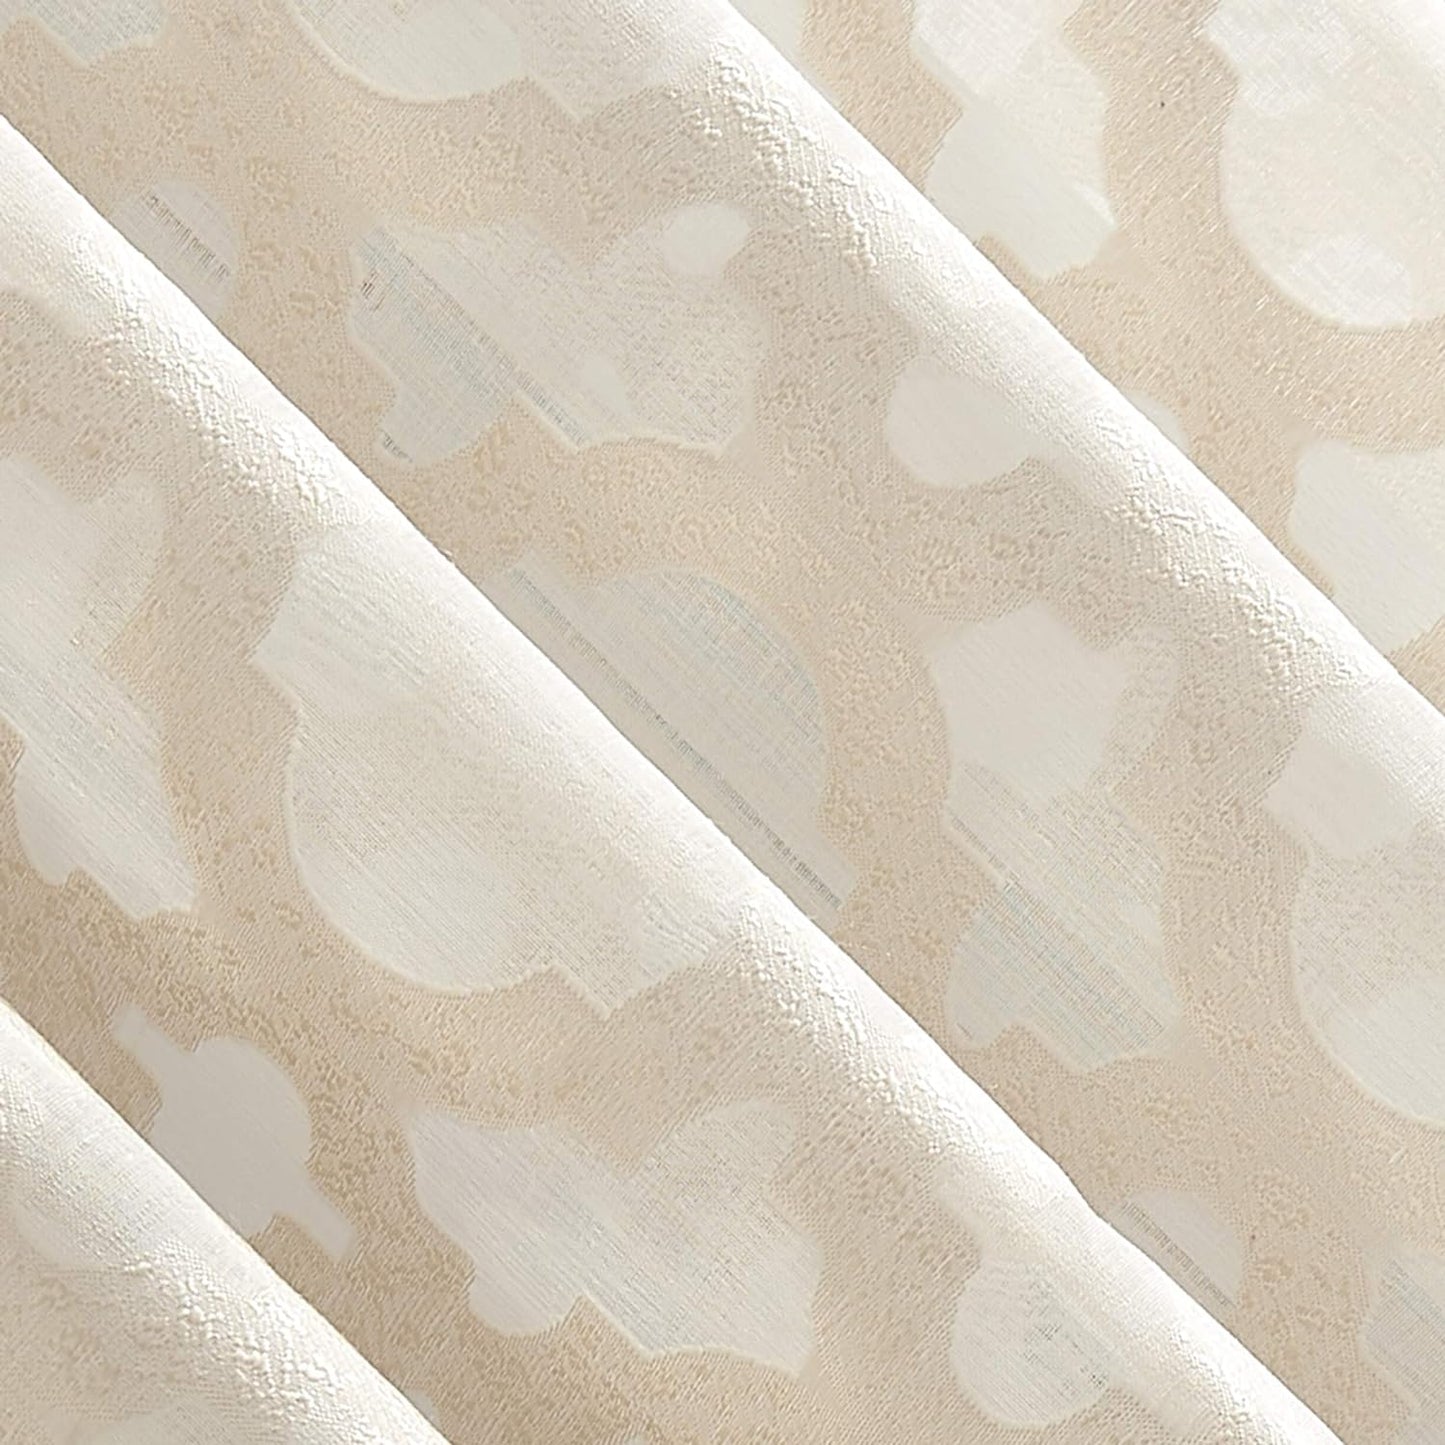 No. 918 Yvette Trellis Jacquard Sheer Rod Pocket Curtain Panel, 52" X 84", Cream Off-White  No. 918   